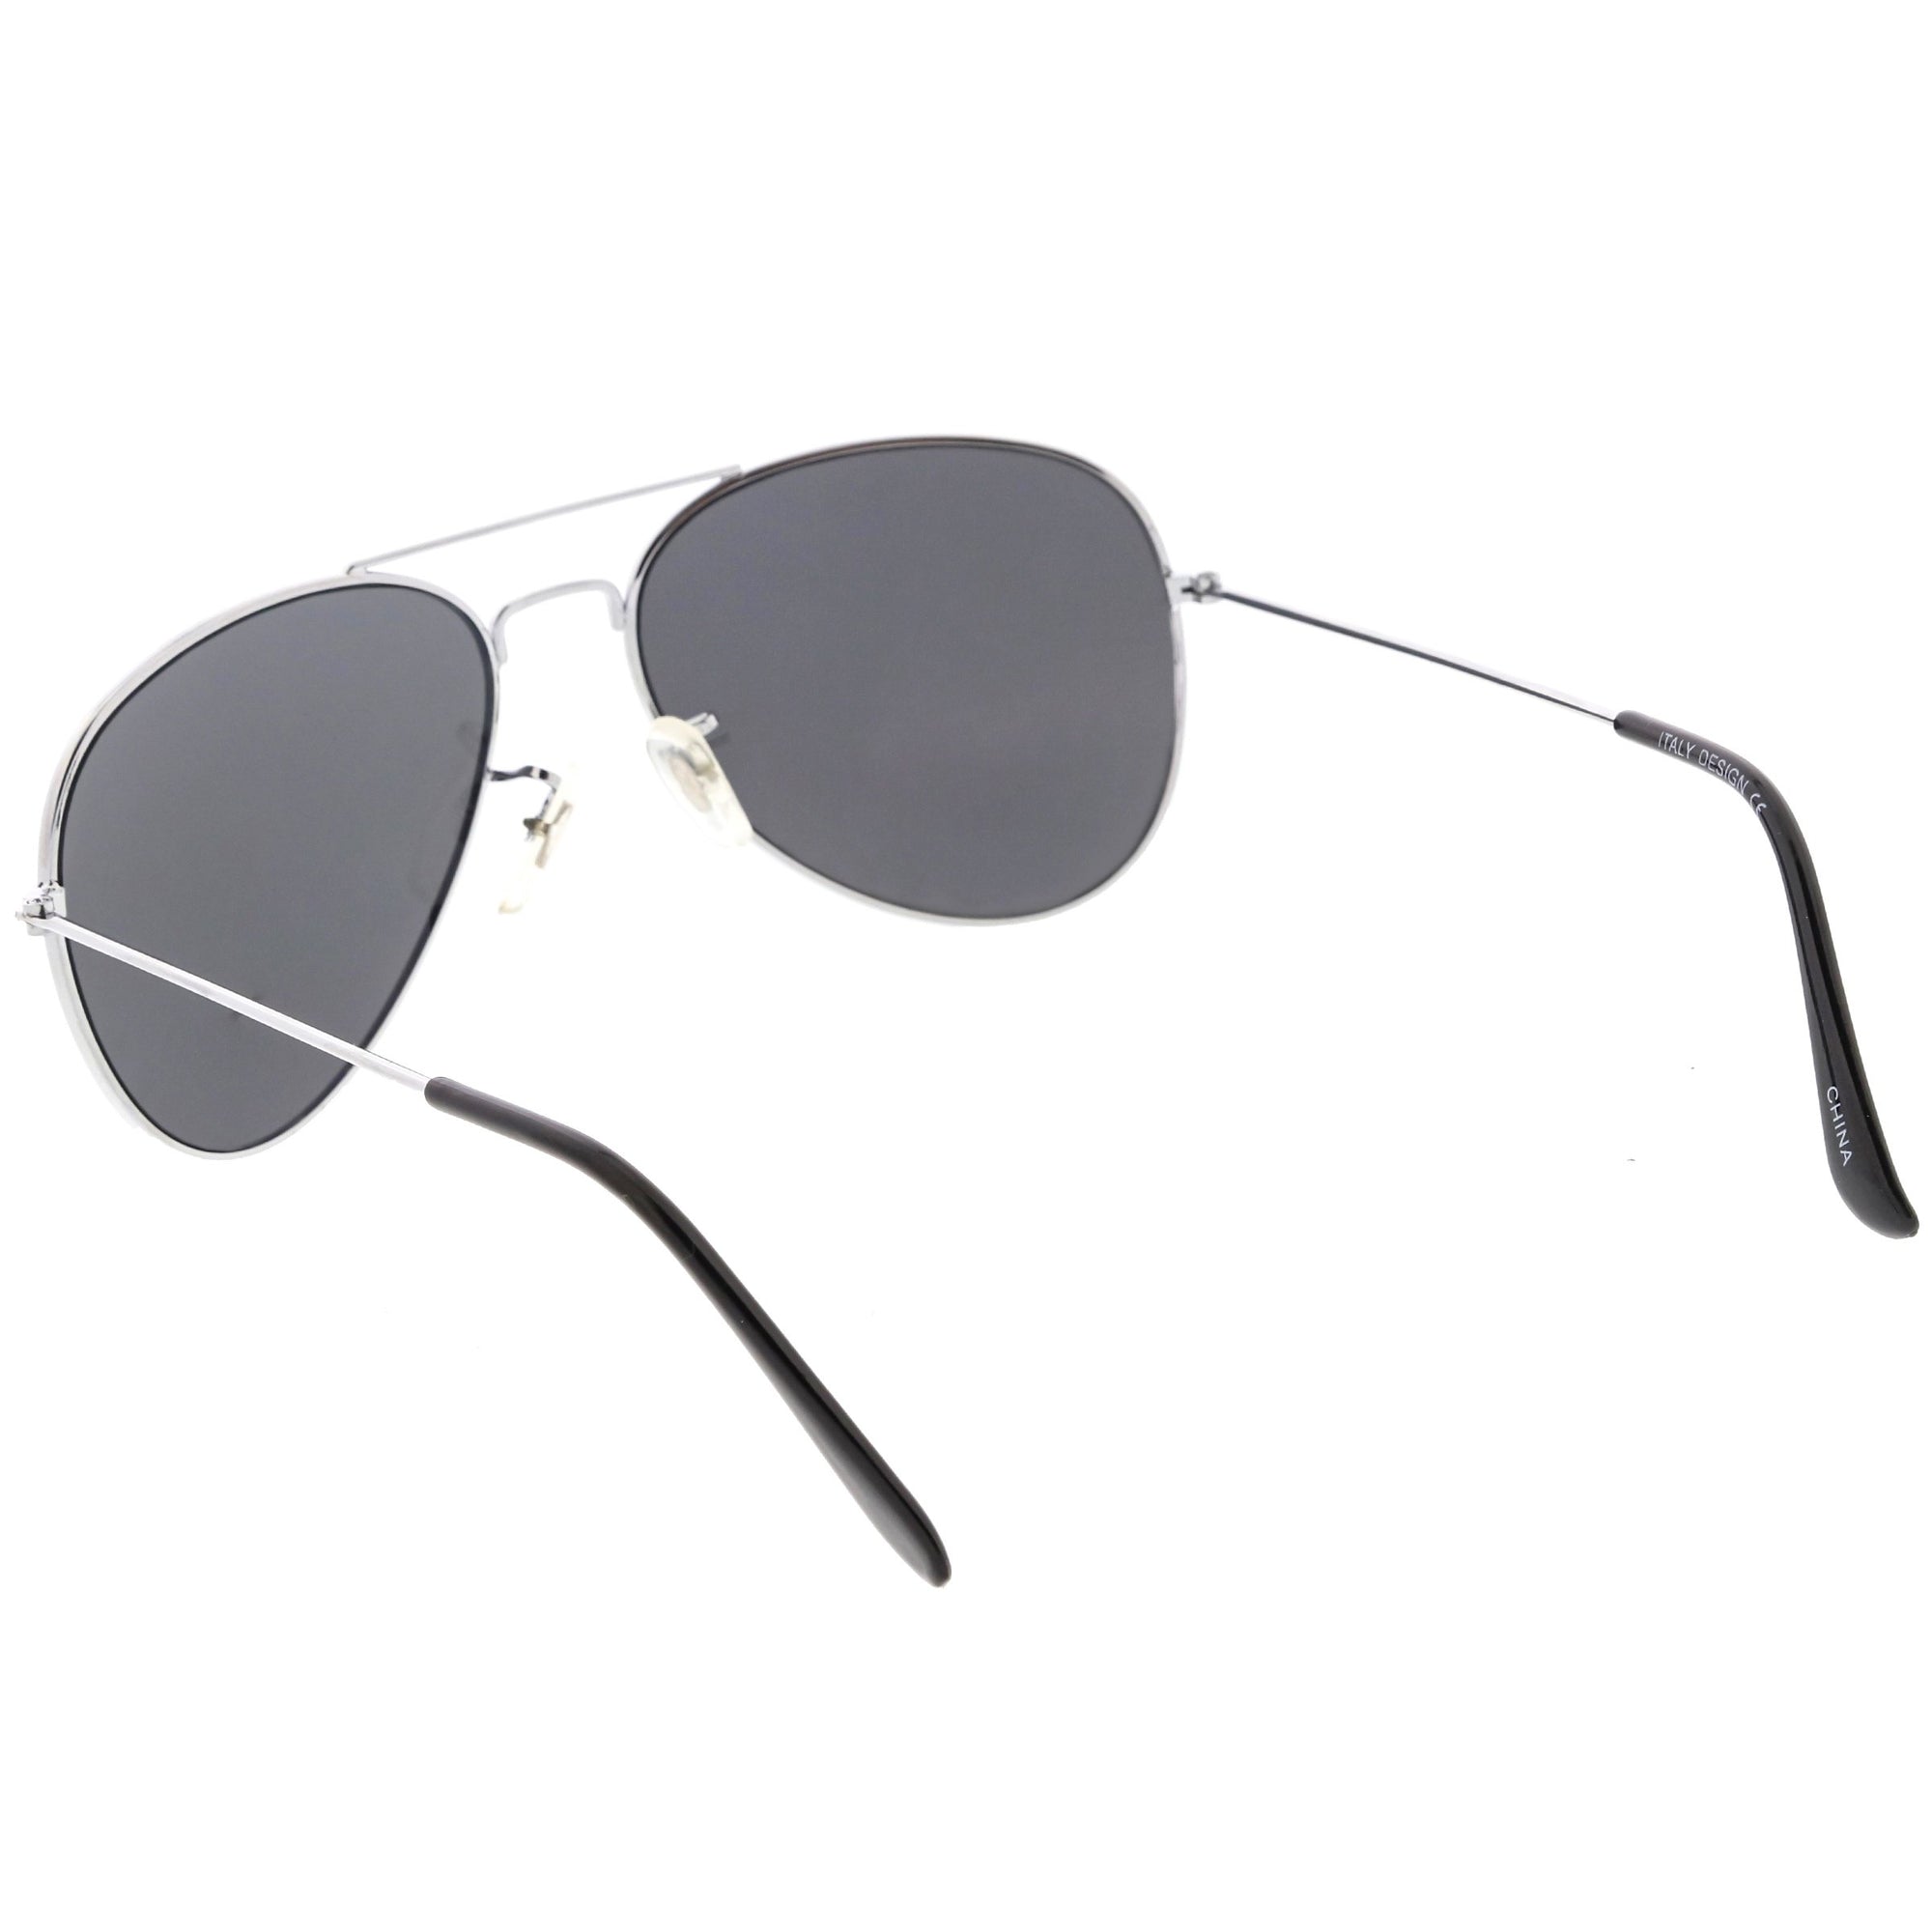 Classic Retro Metal Nickel Finish Mirrored Lens Sunglasses - zeroUV